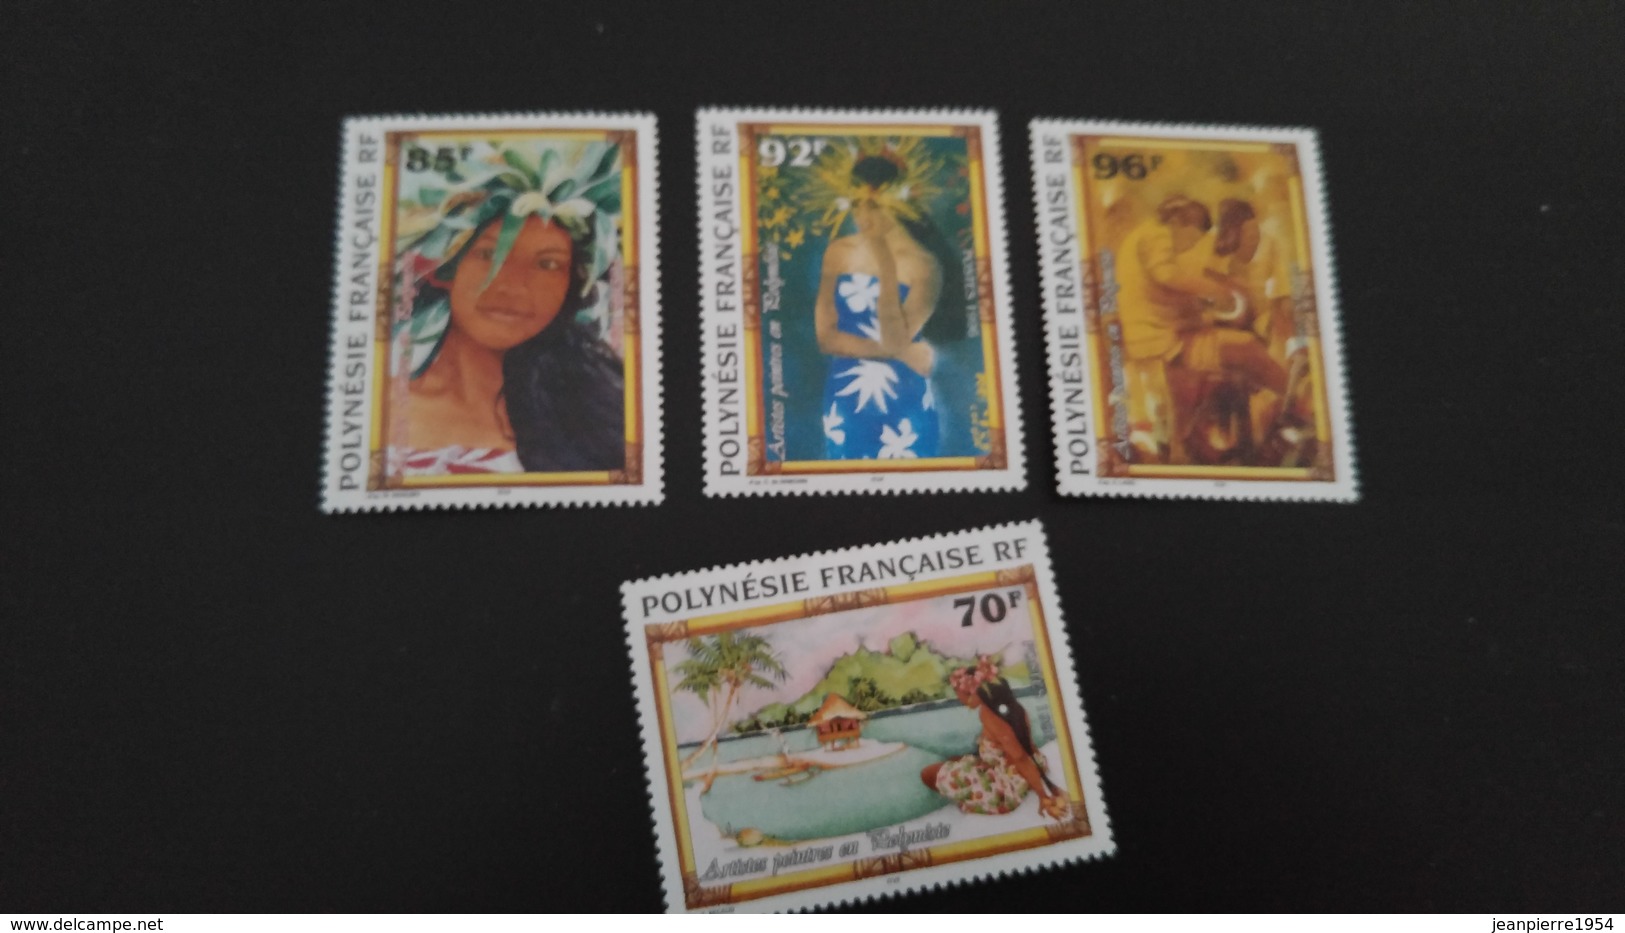 Polynesie Française Neufxxx - Collections (with Albums)